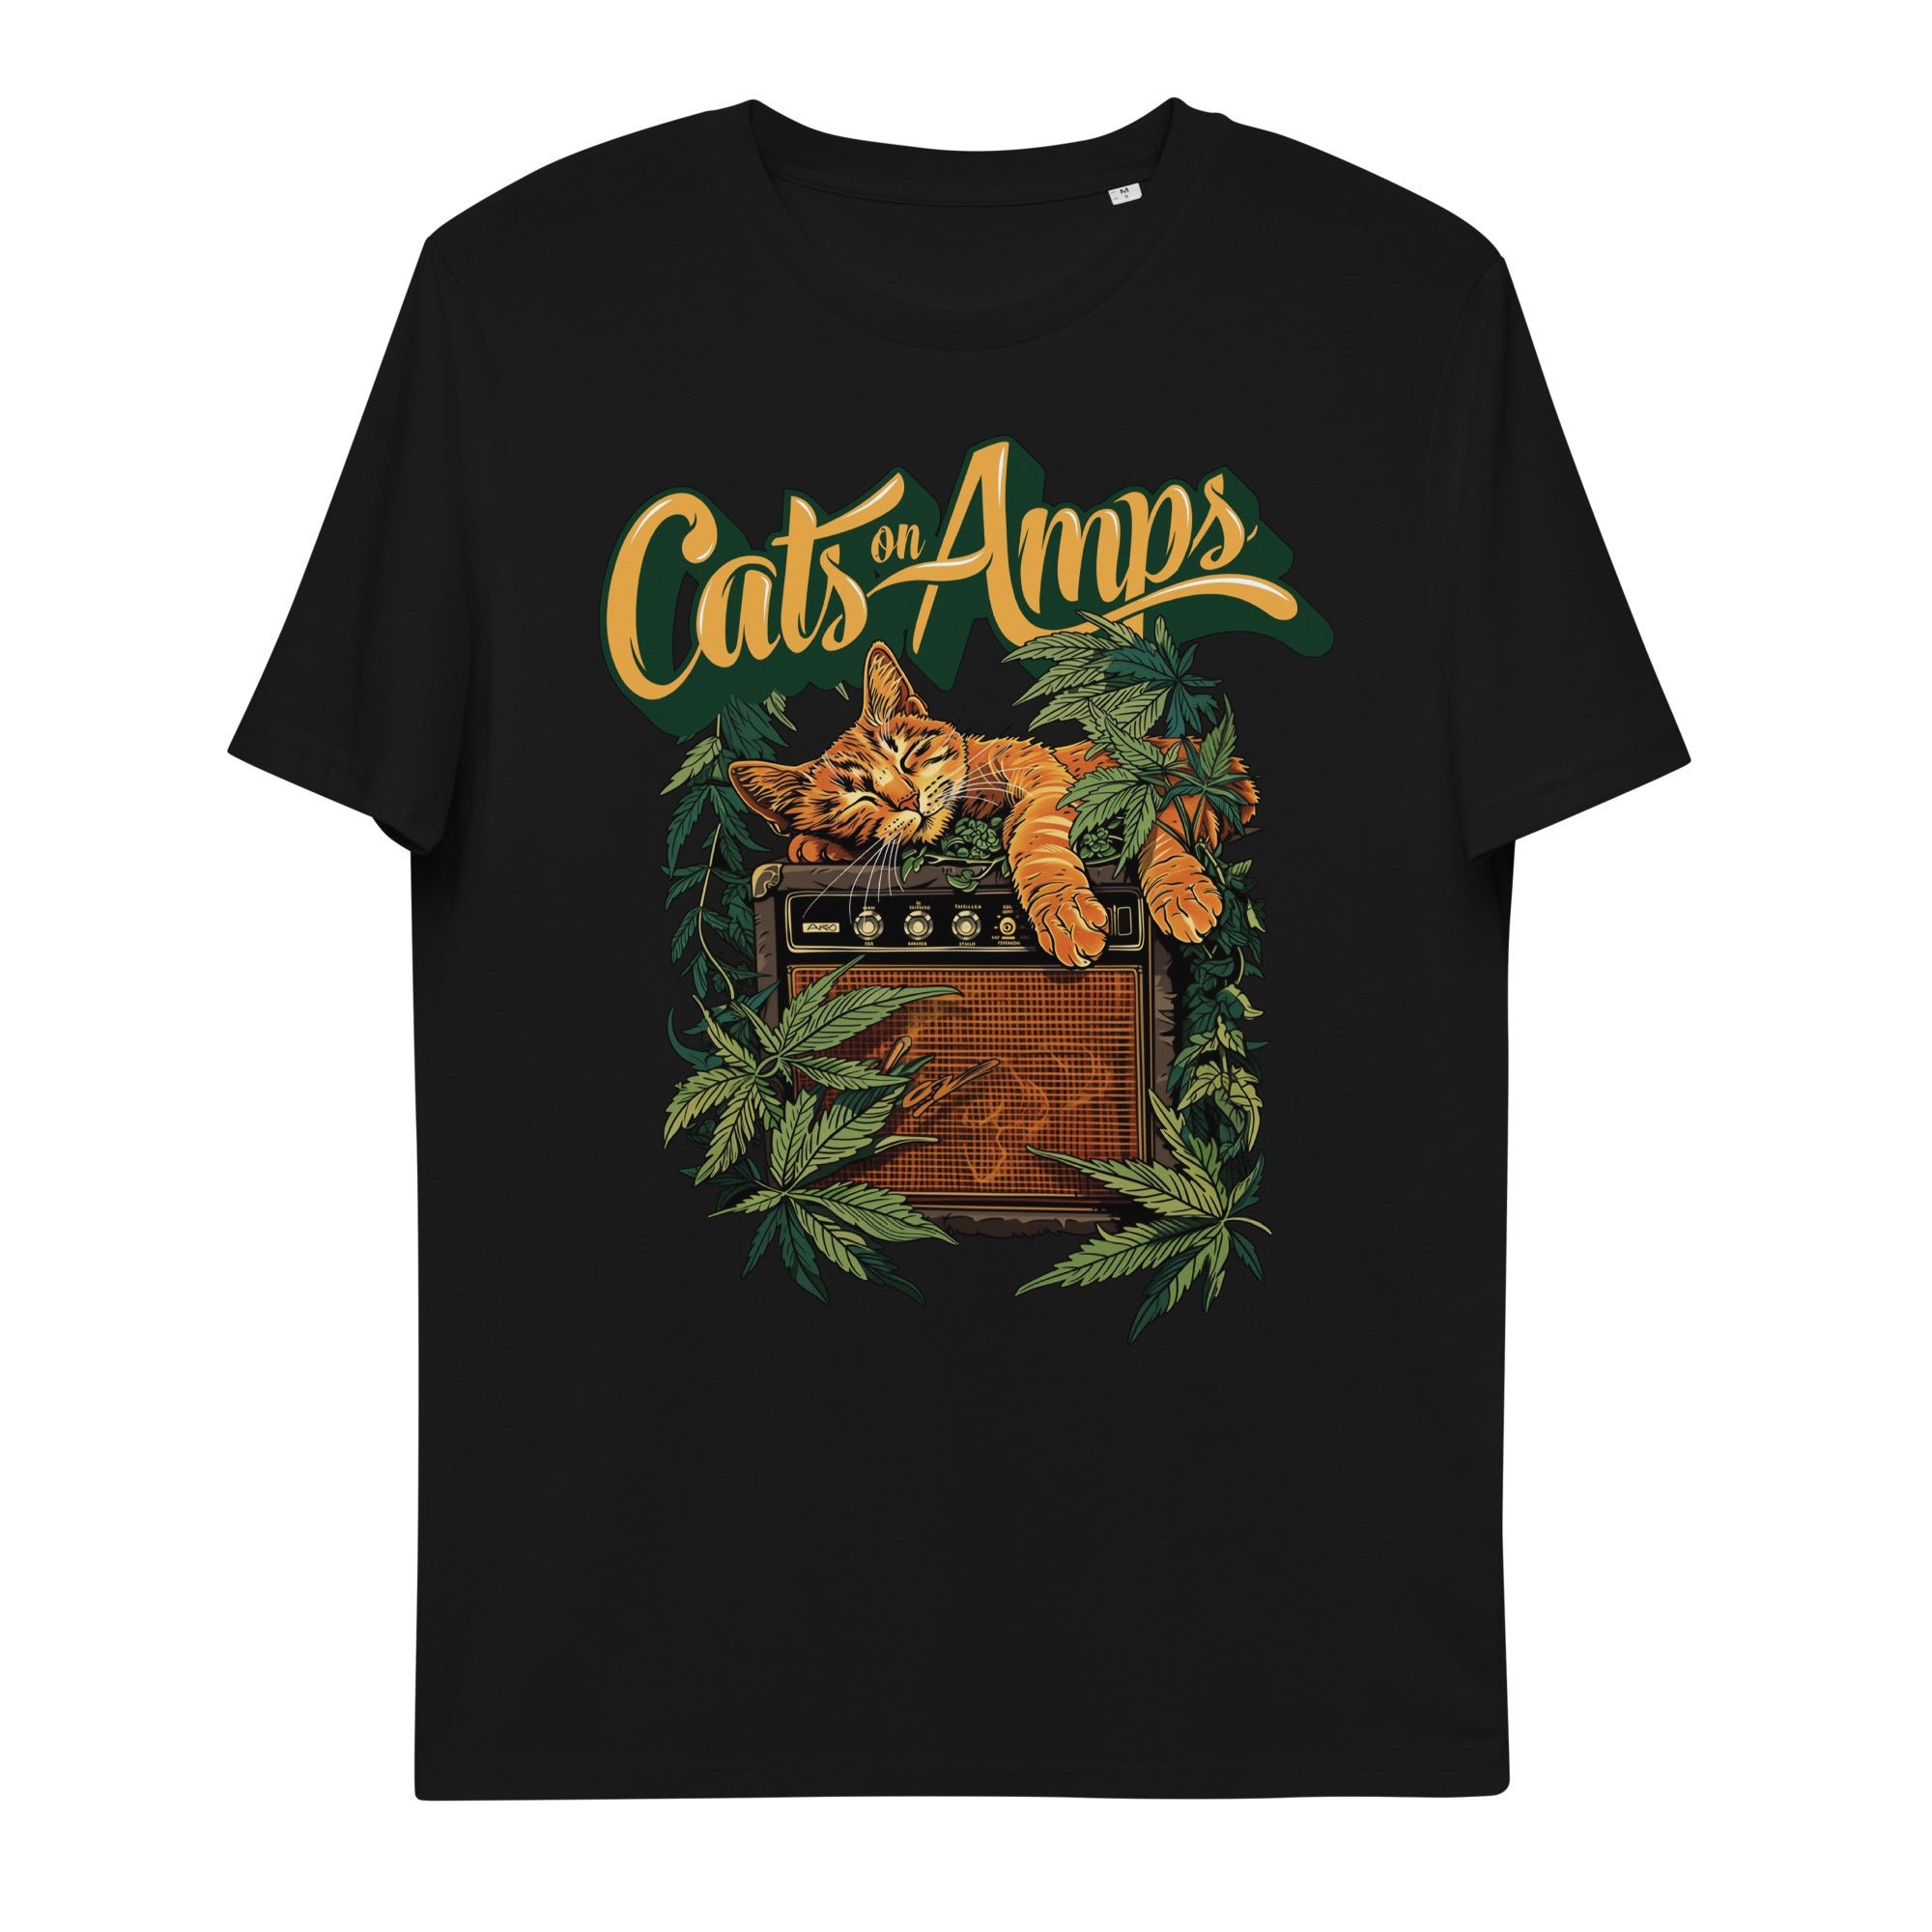 CATS ON AMPS - 420 Sleeper - Unisex Organic Cotton T-shirt